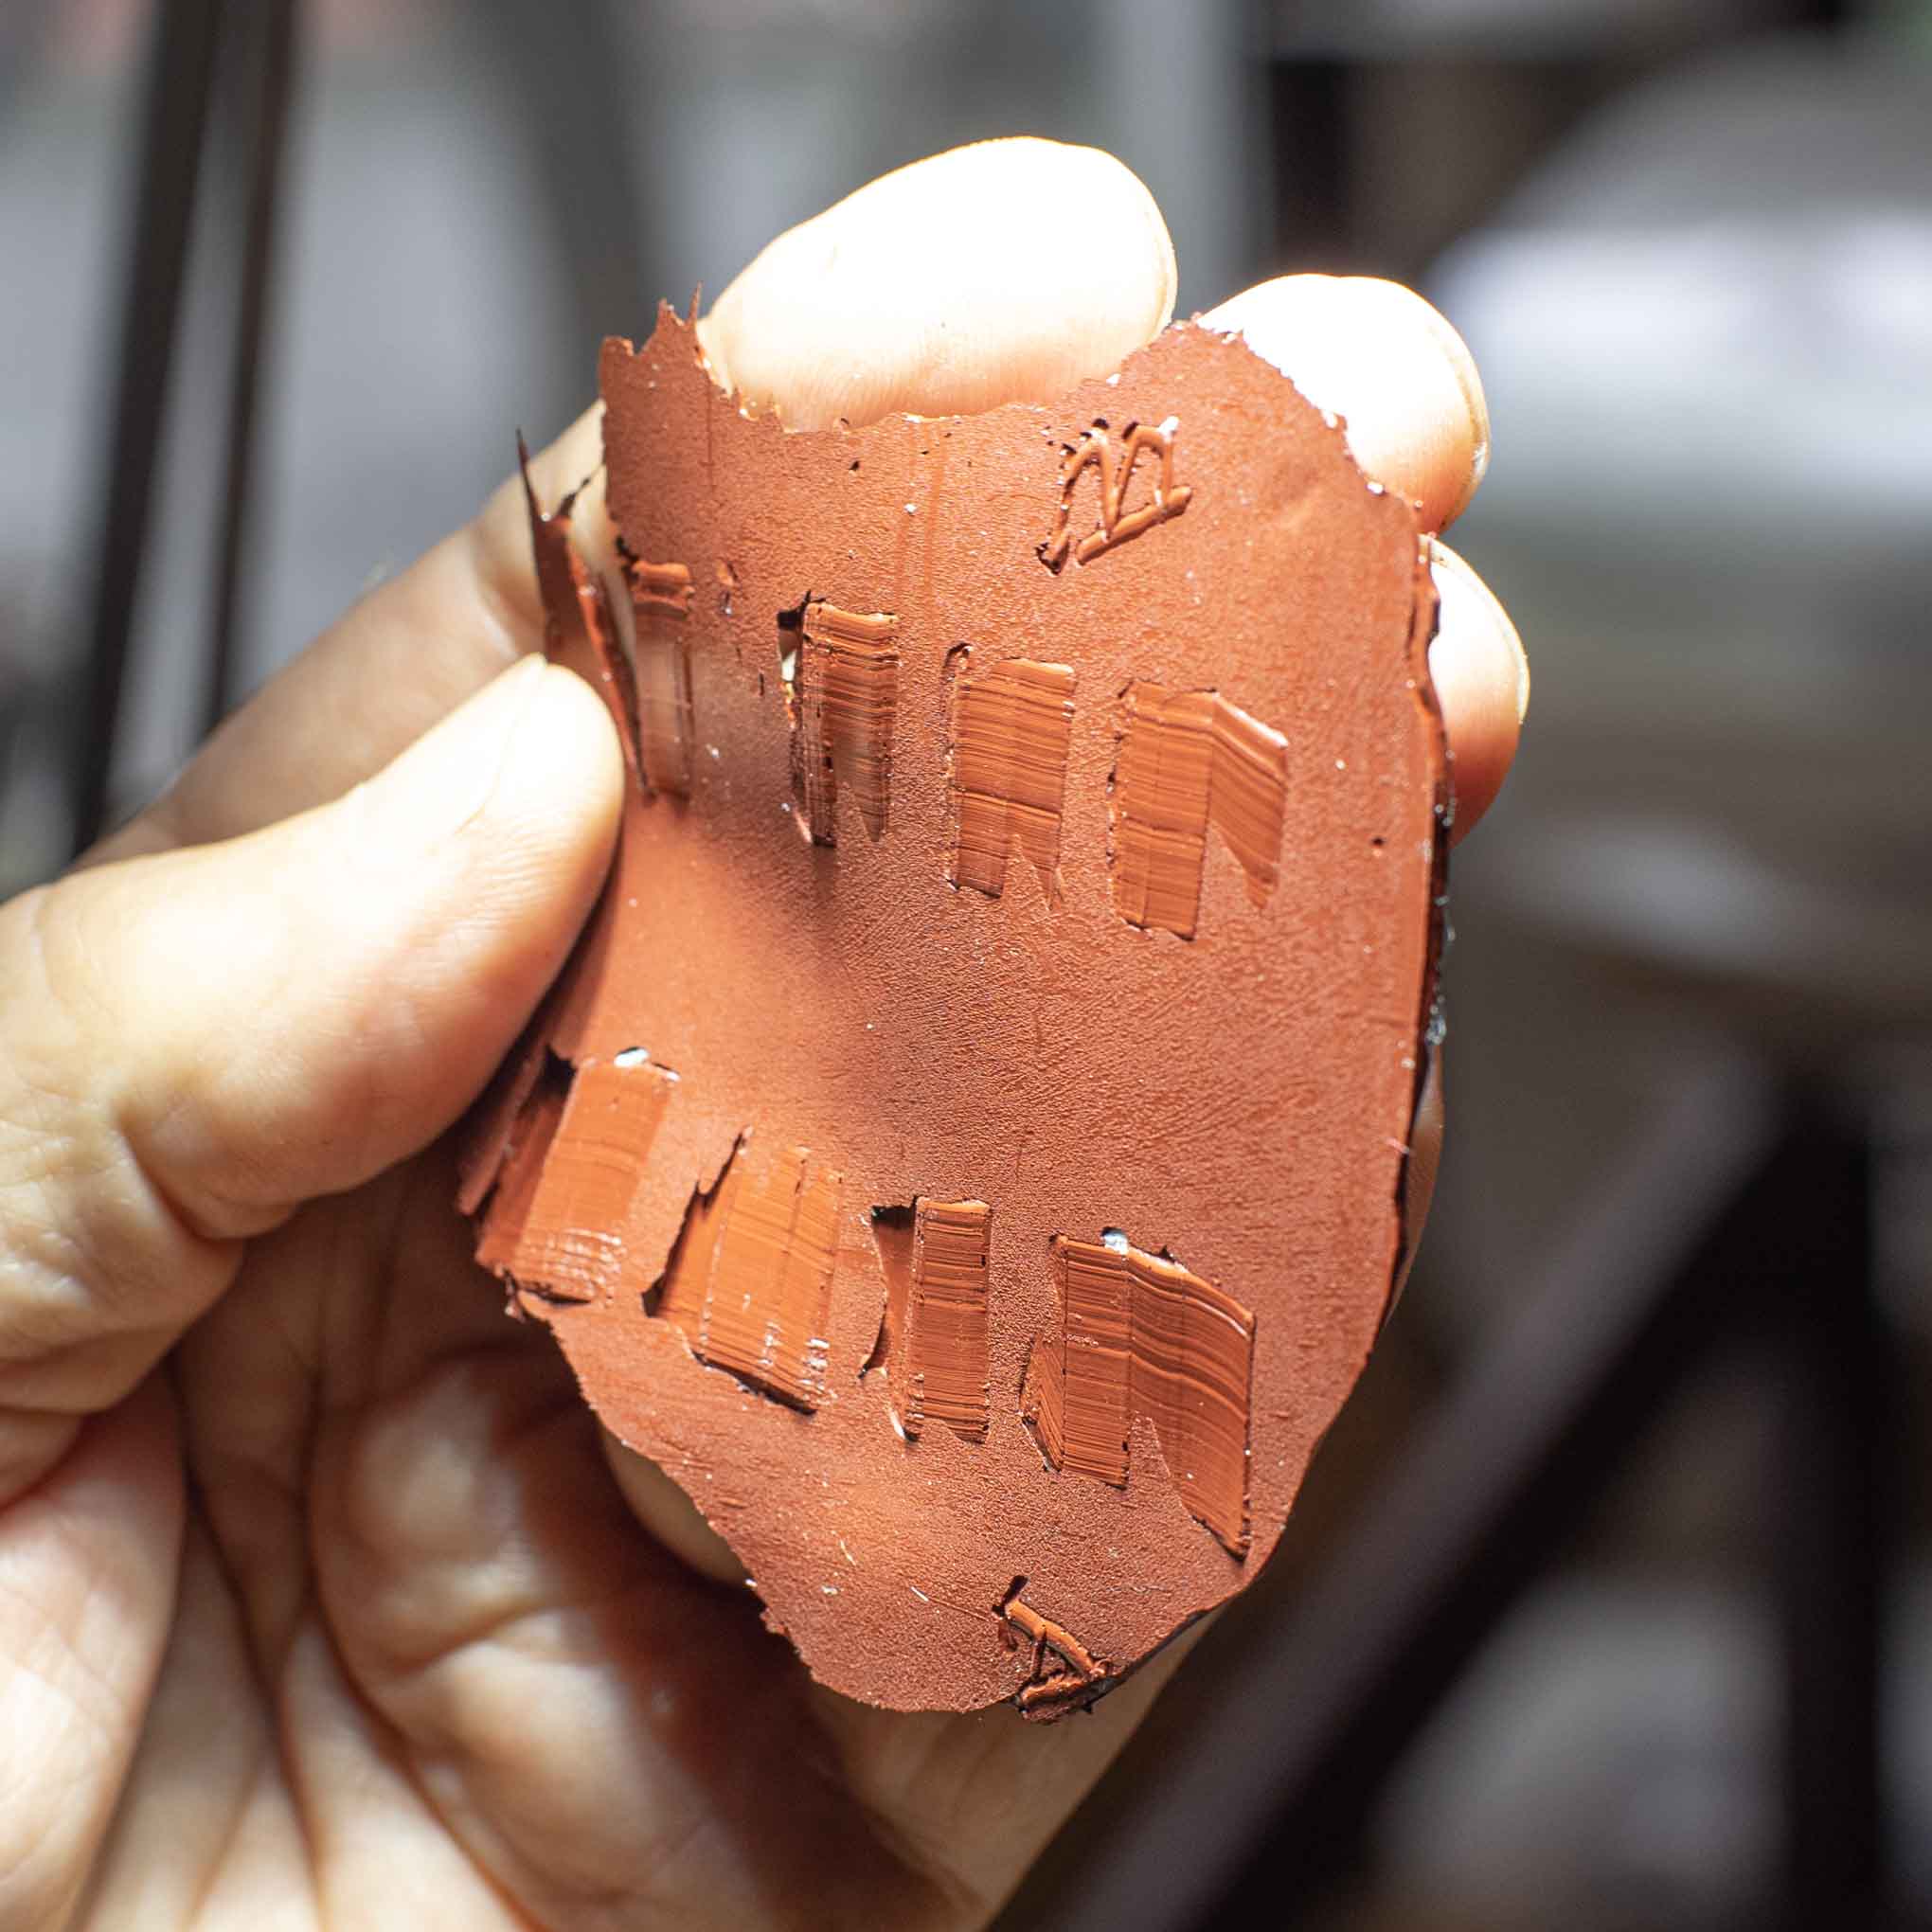 mikrosil brown casting of toolmark